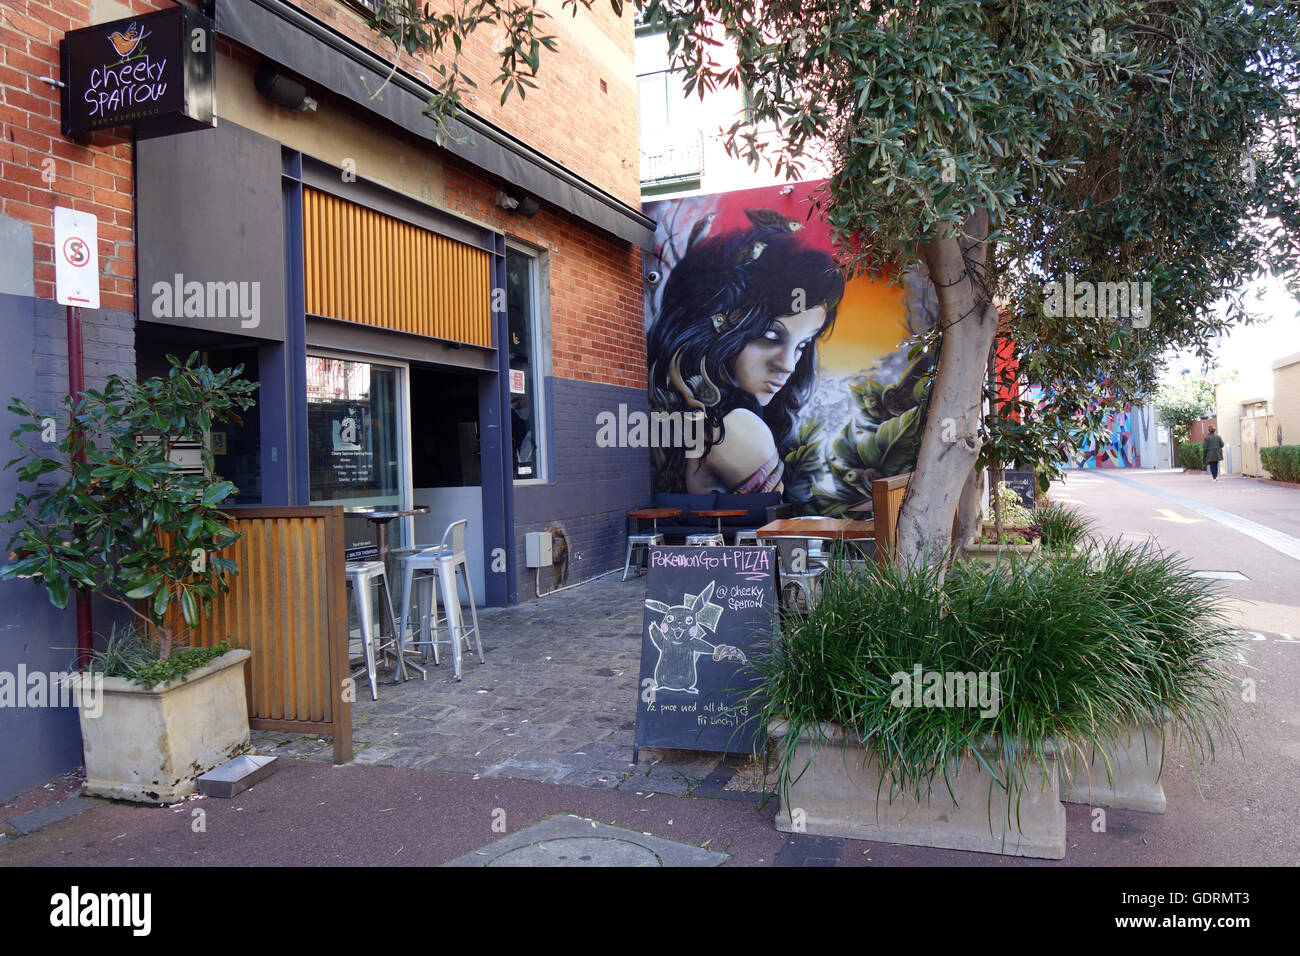 Cafe offering PokemonGo and pizza deals, Cheeky Sparrow, Wolf Lane, Perth CBD, Western Australia. No PR Stock Photo